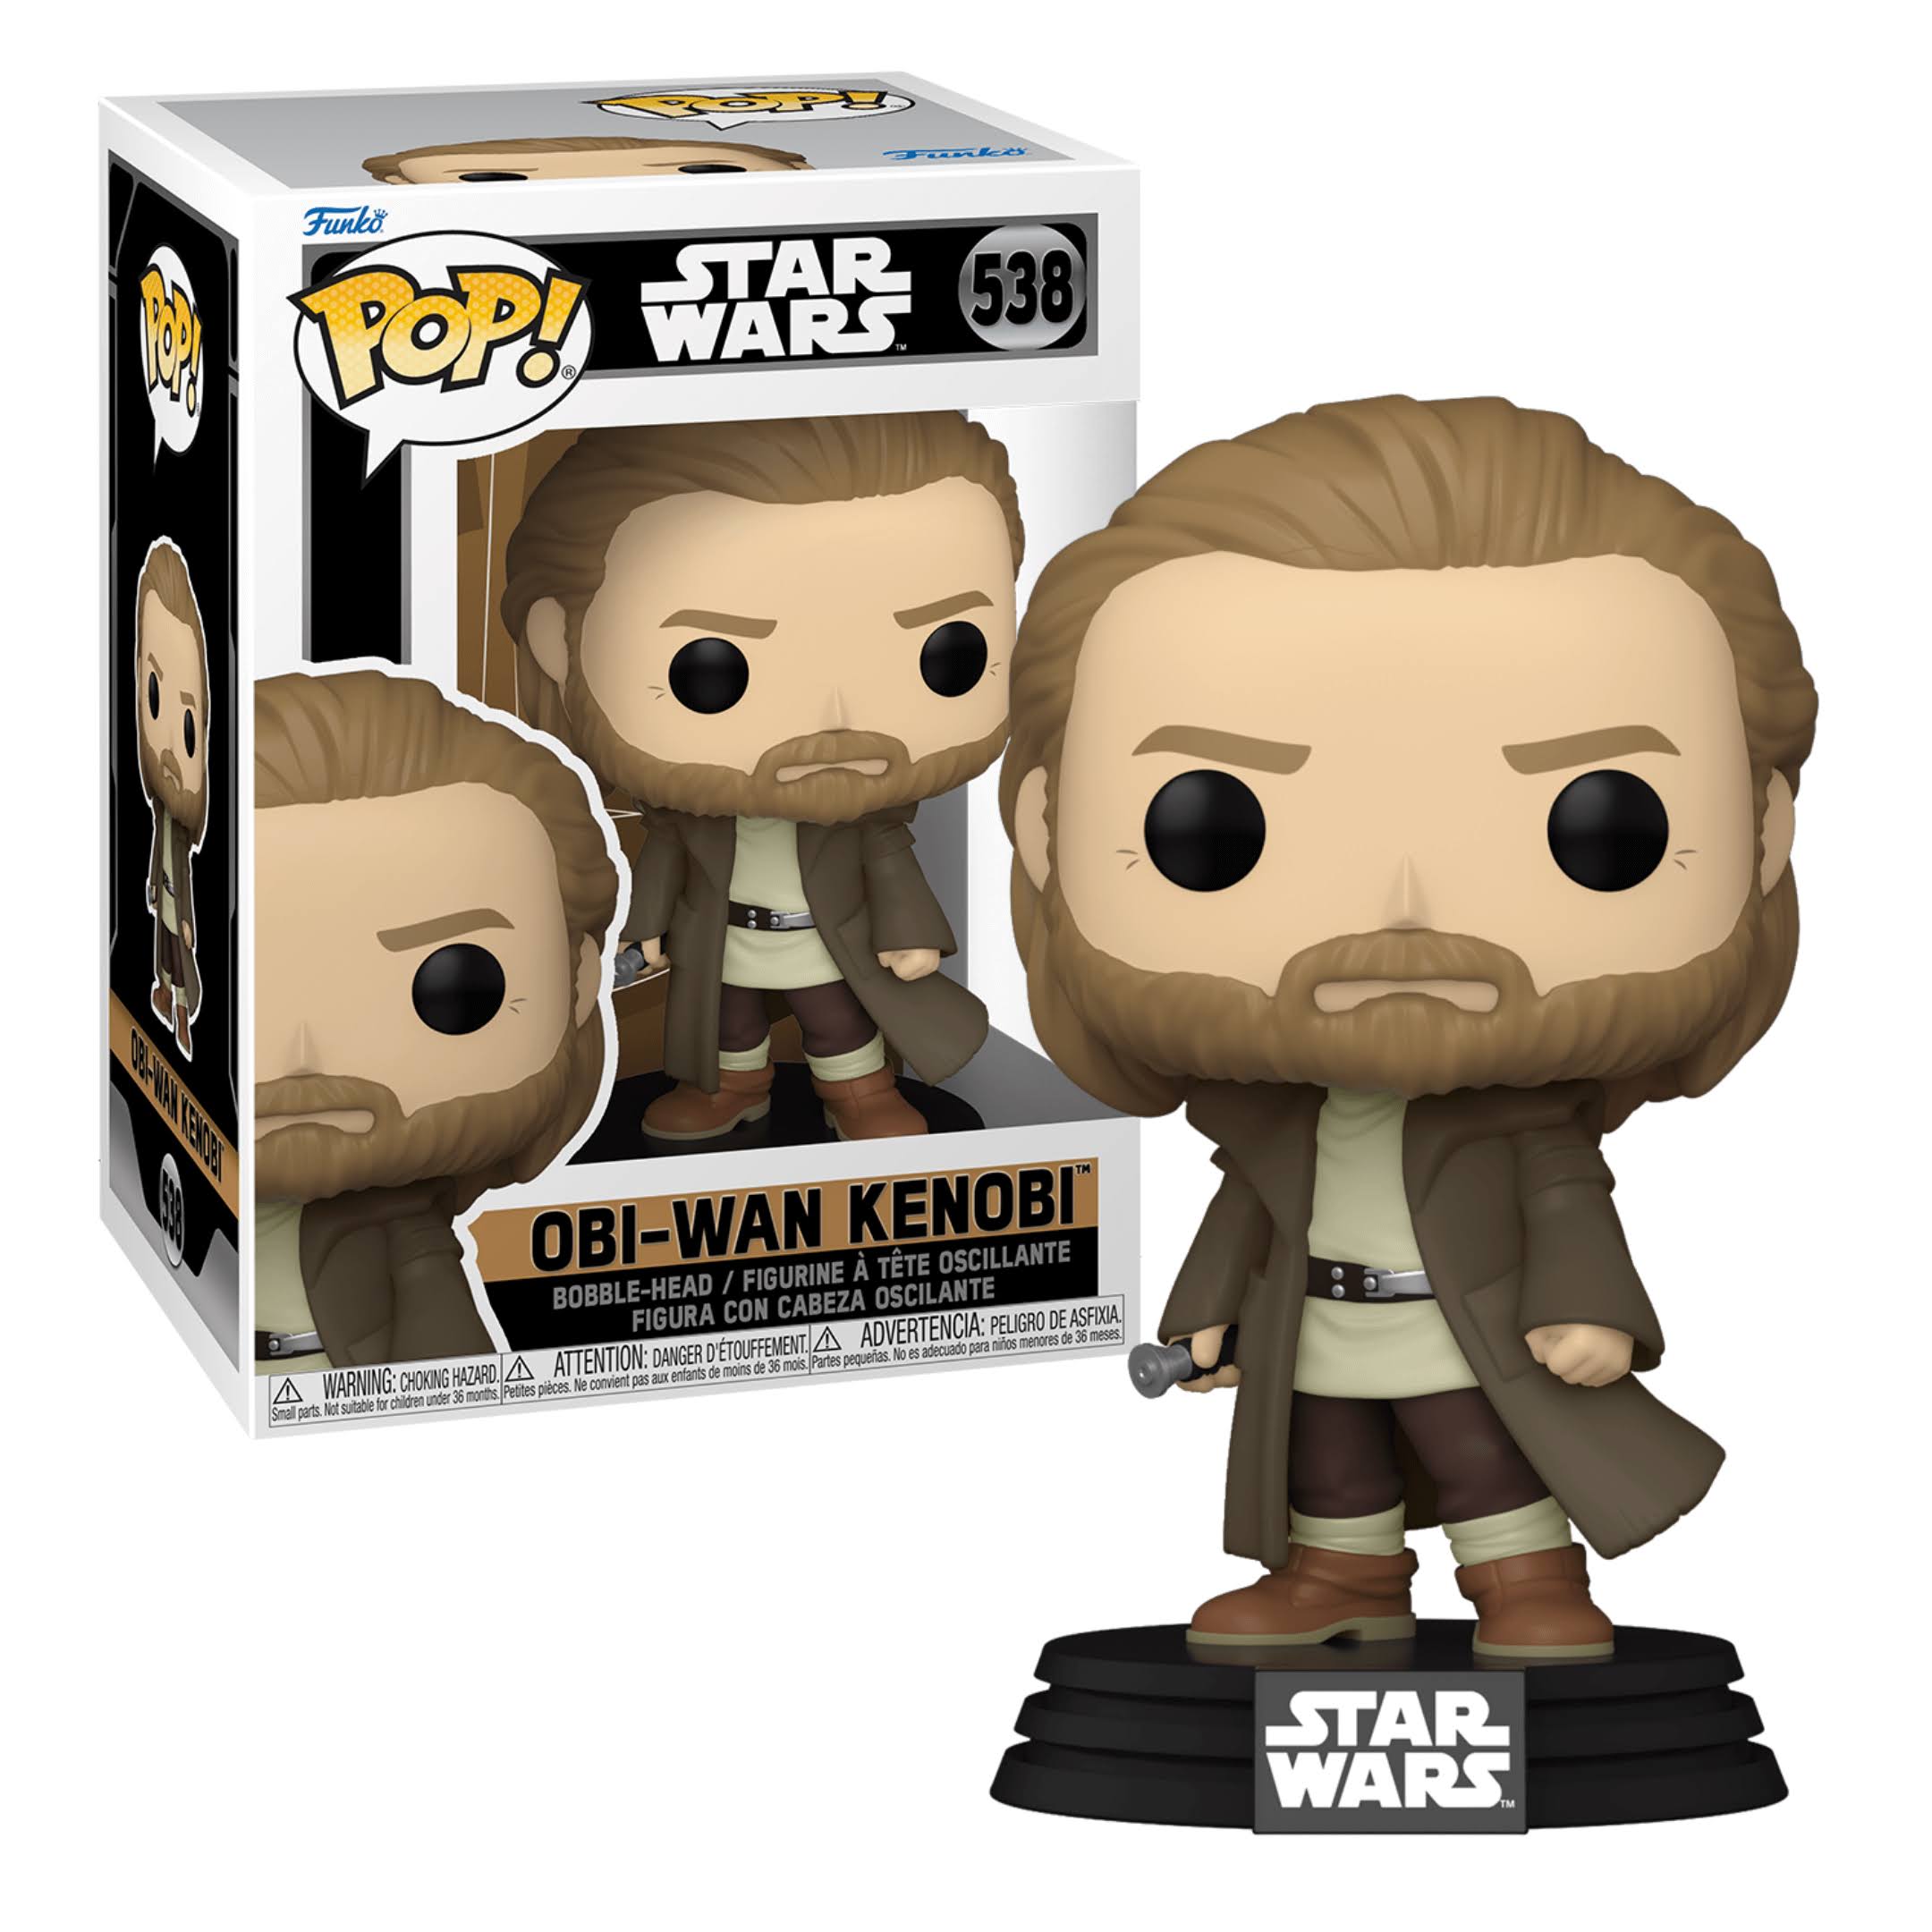 Star Wars Obi-Wan Kenobi Pop! Vinyl